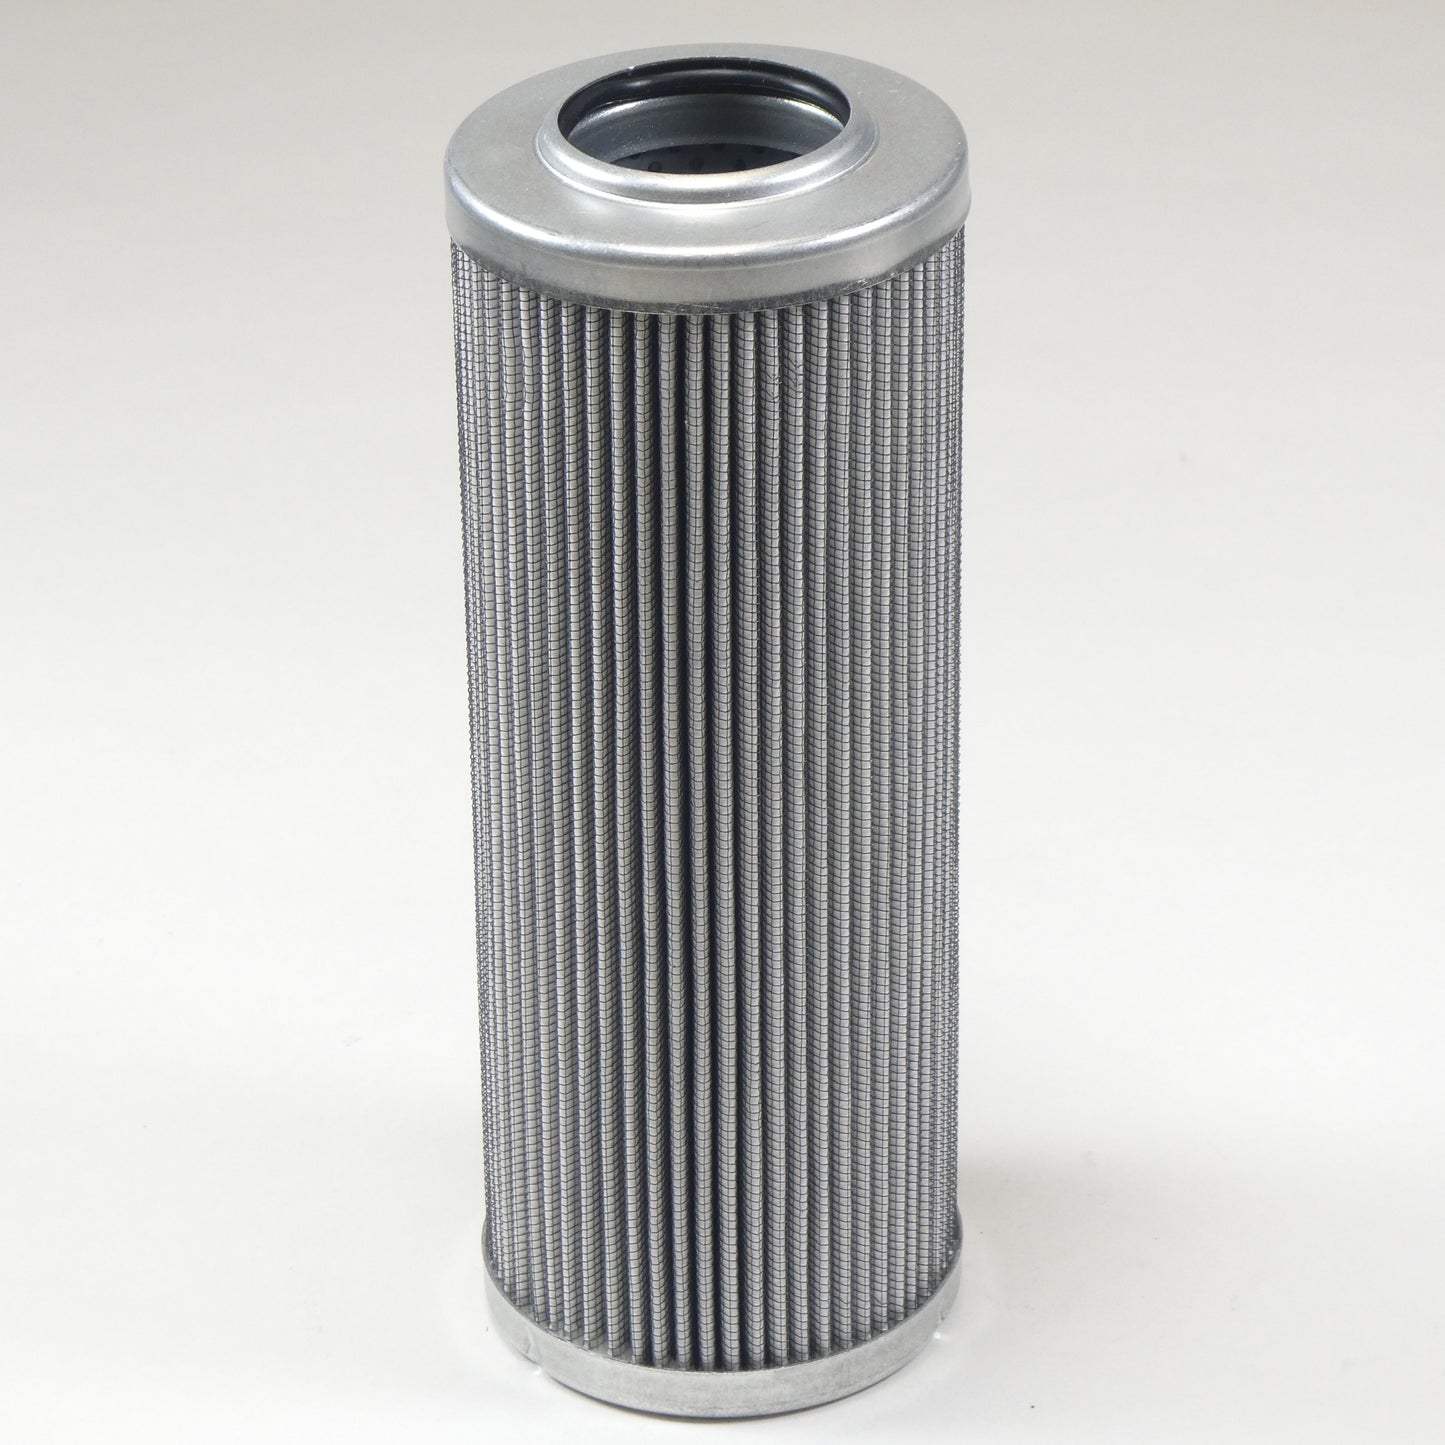 Hydrafil Replacement Filter Element for Donaldson DX2-9600-8-5UM-V